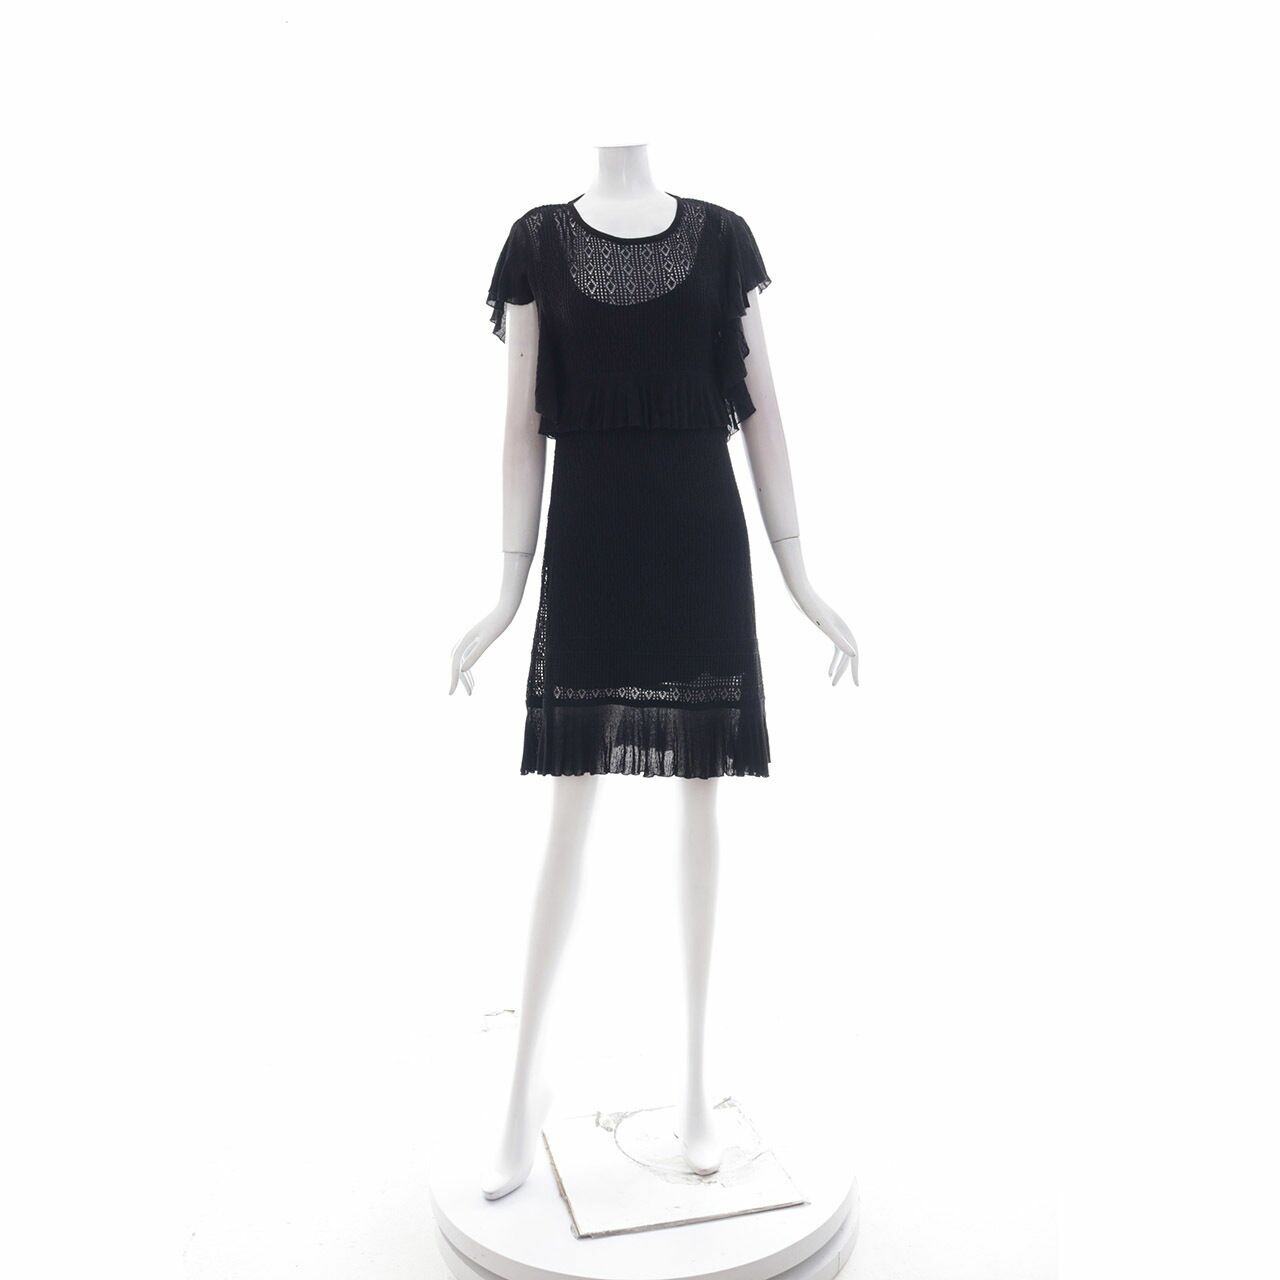 Zara Black Midi Dress